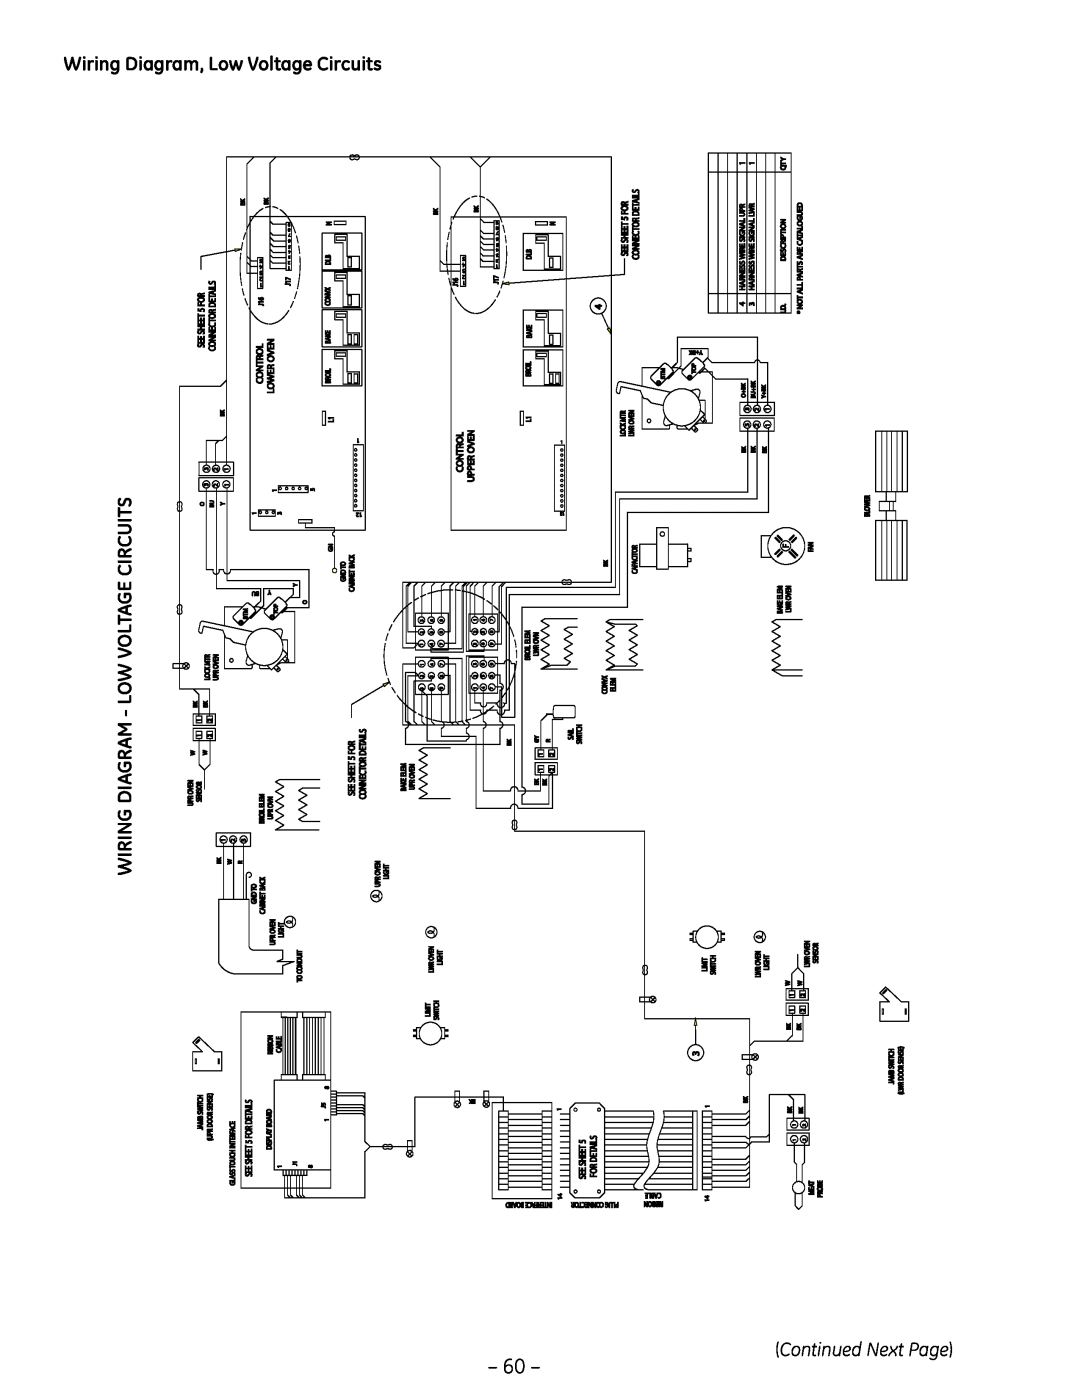 GE PT925 manual Wiring Diagram, Low Voltage Circuits, Wiring Diagram - Low Voltage Circuits, Continued Next Page 